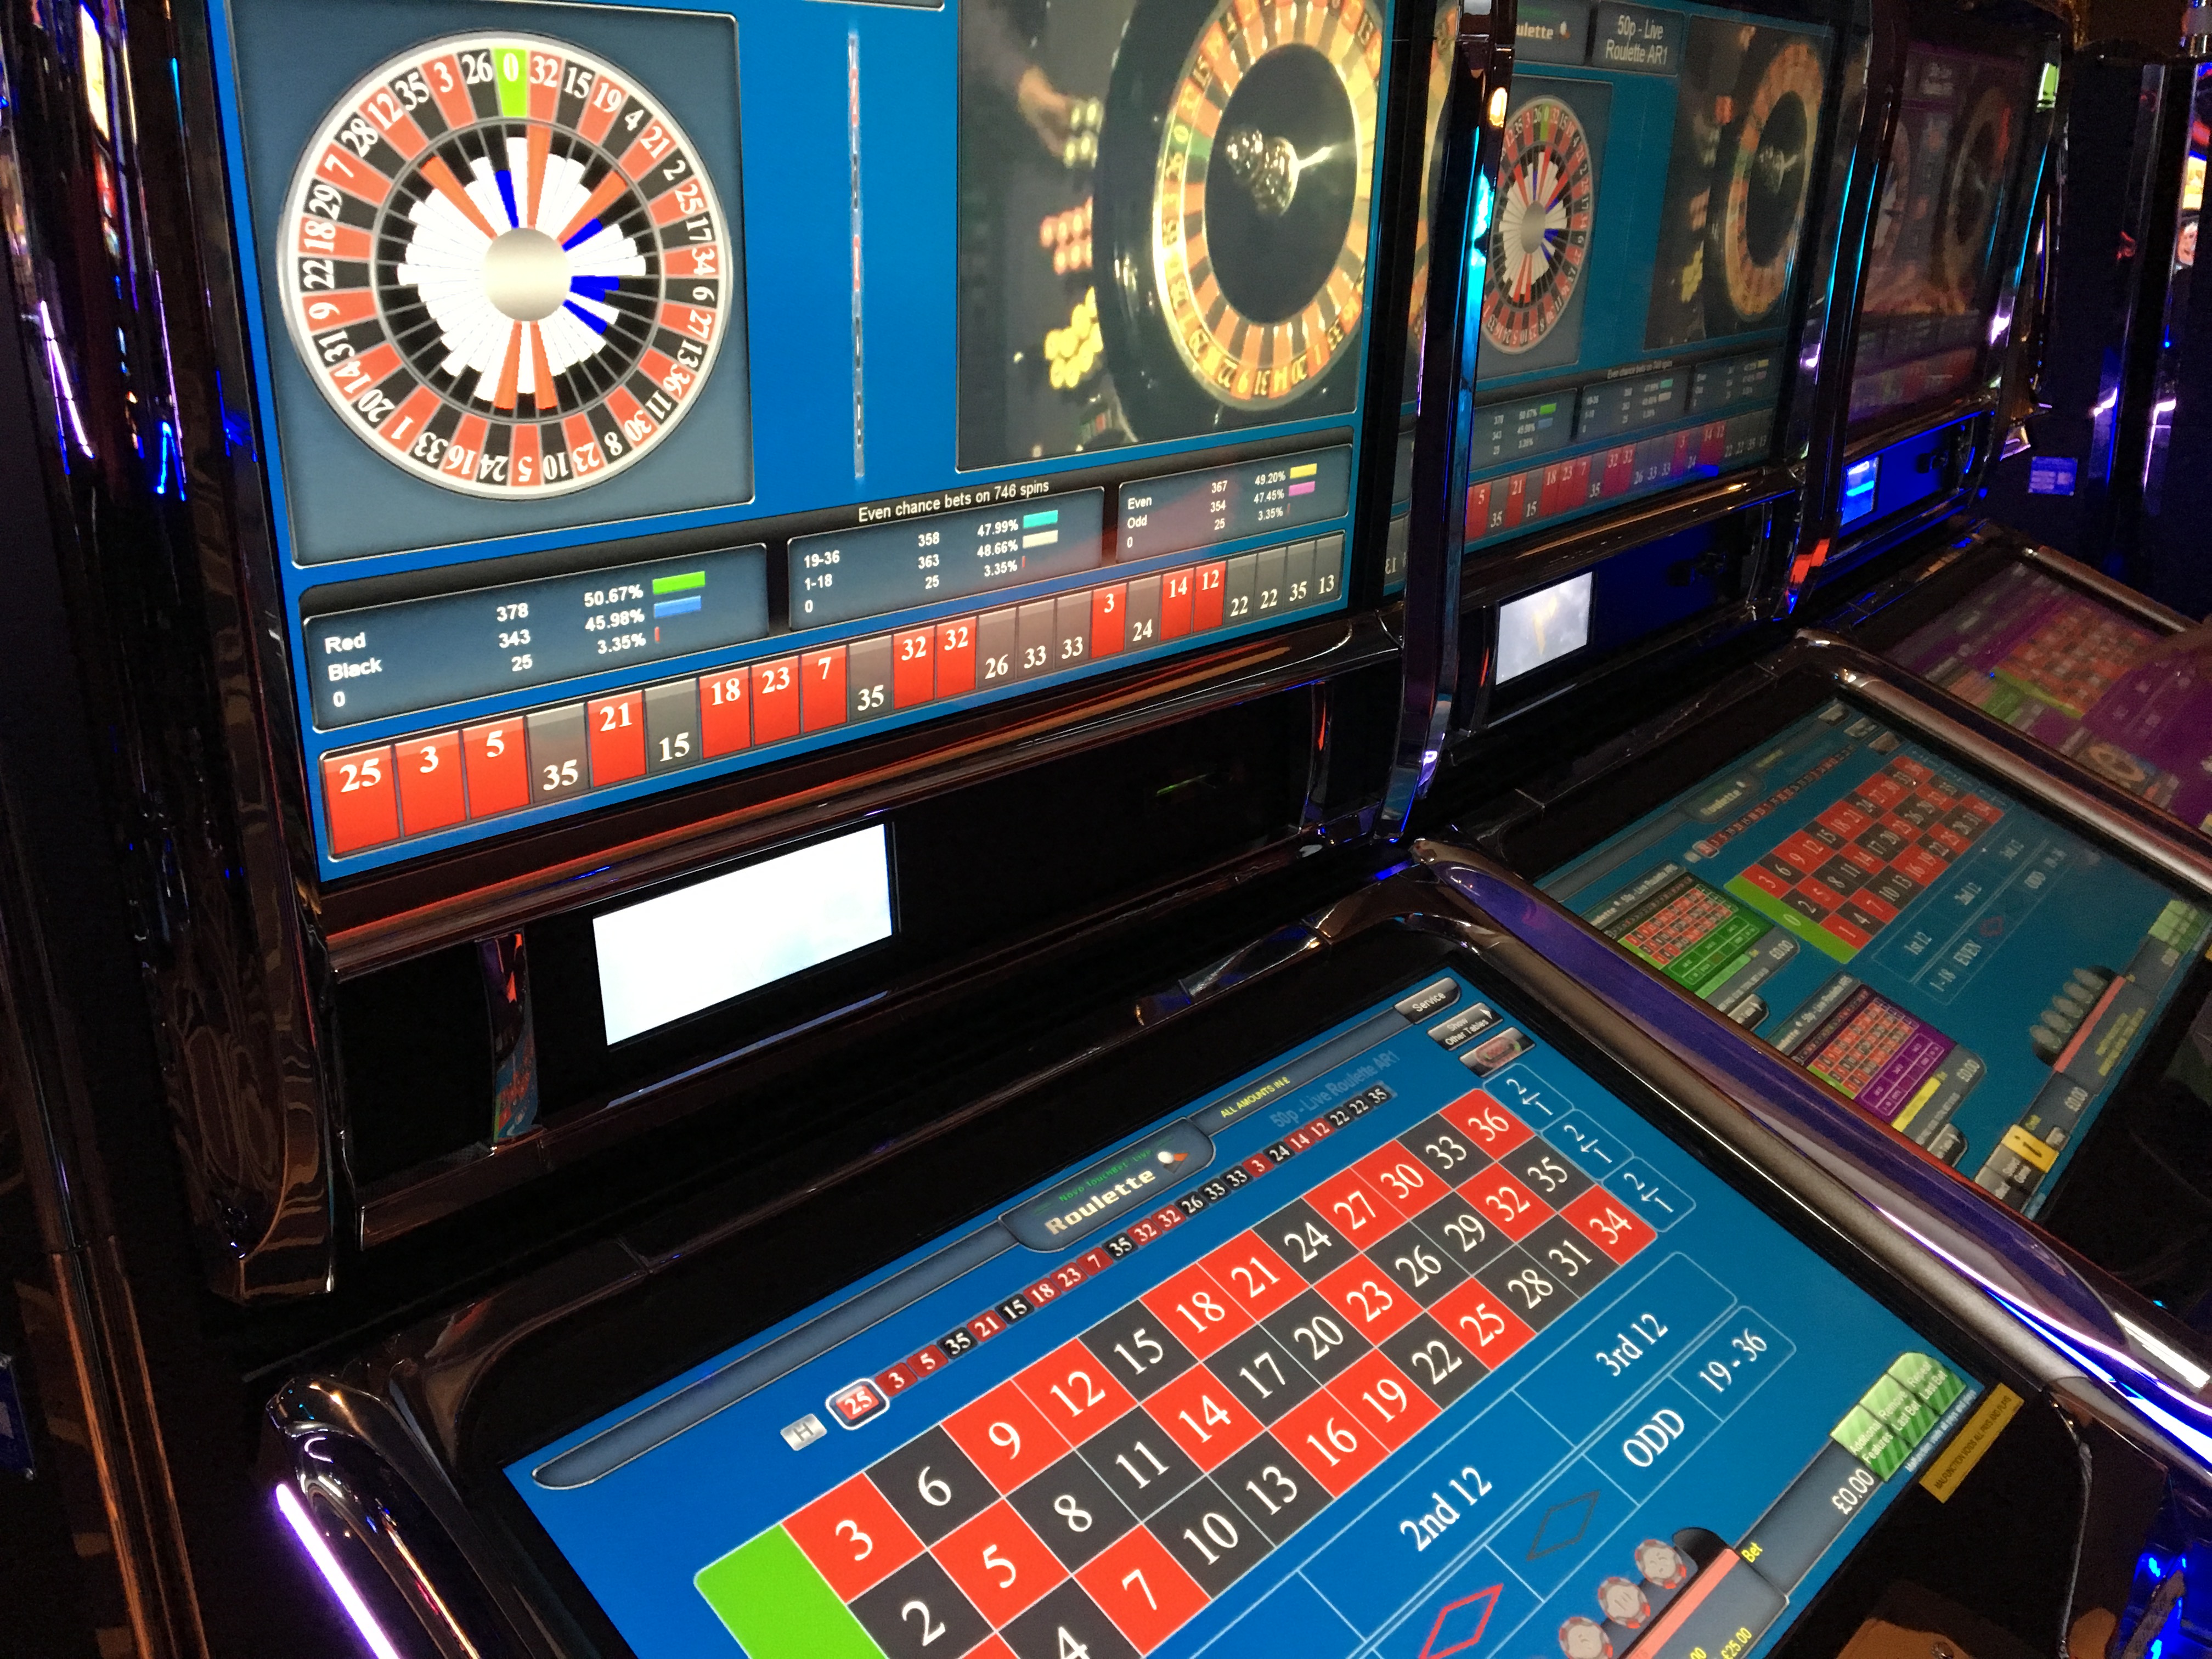 онлайн казино на телефон kazino reiting2 com